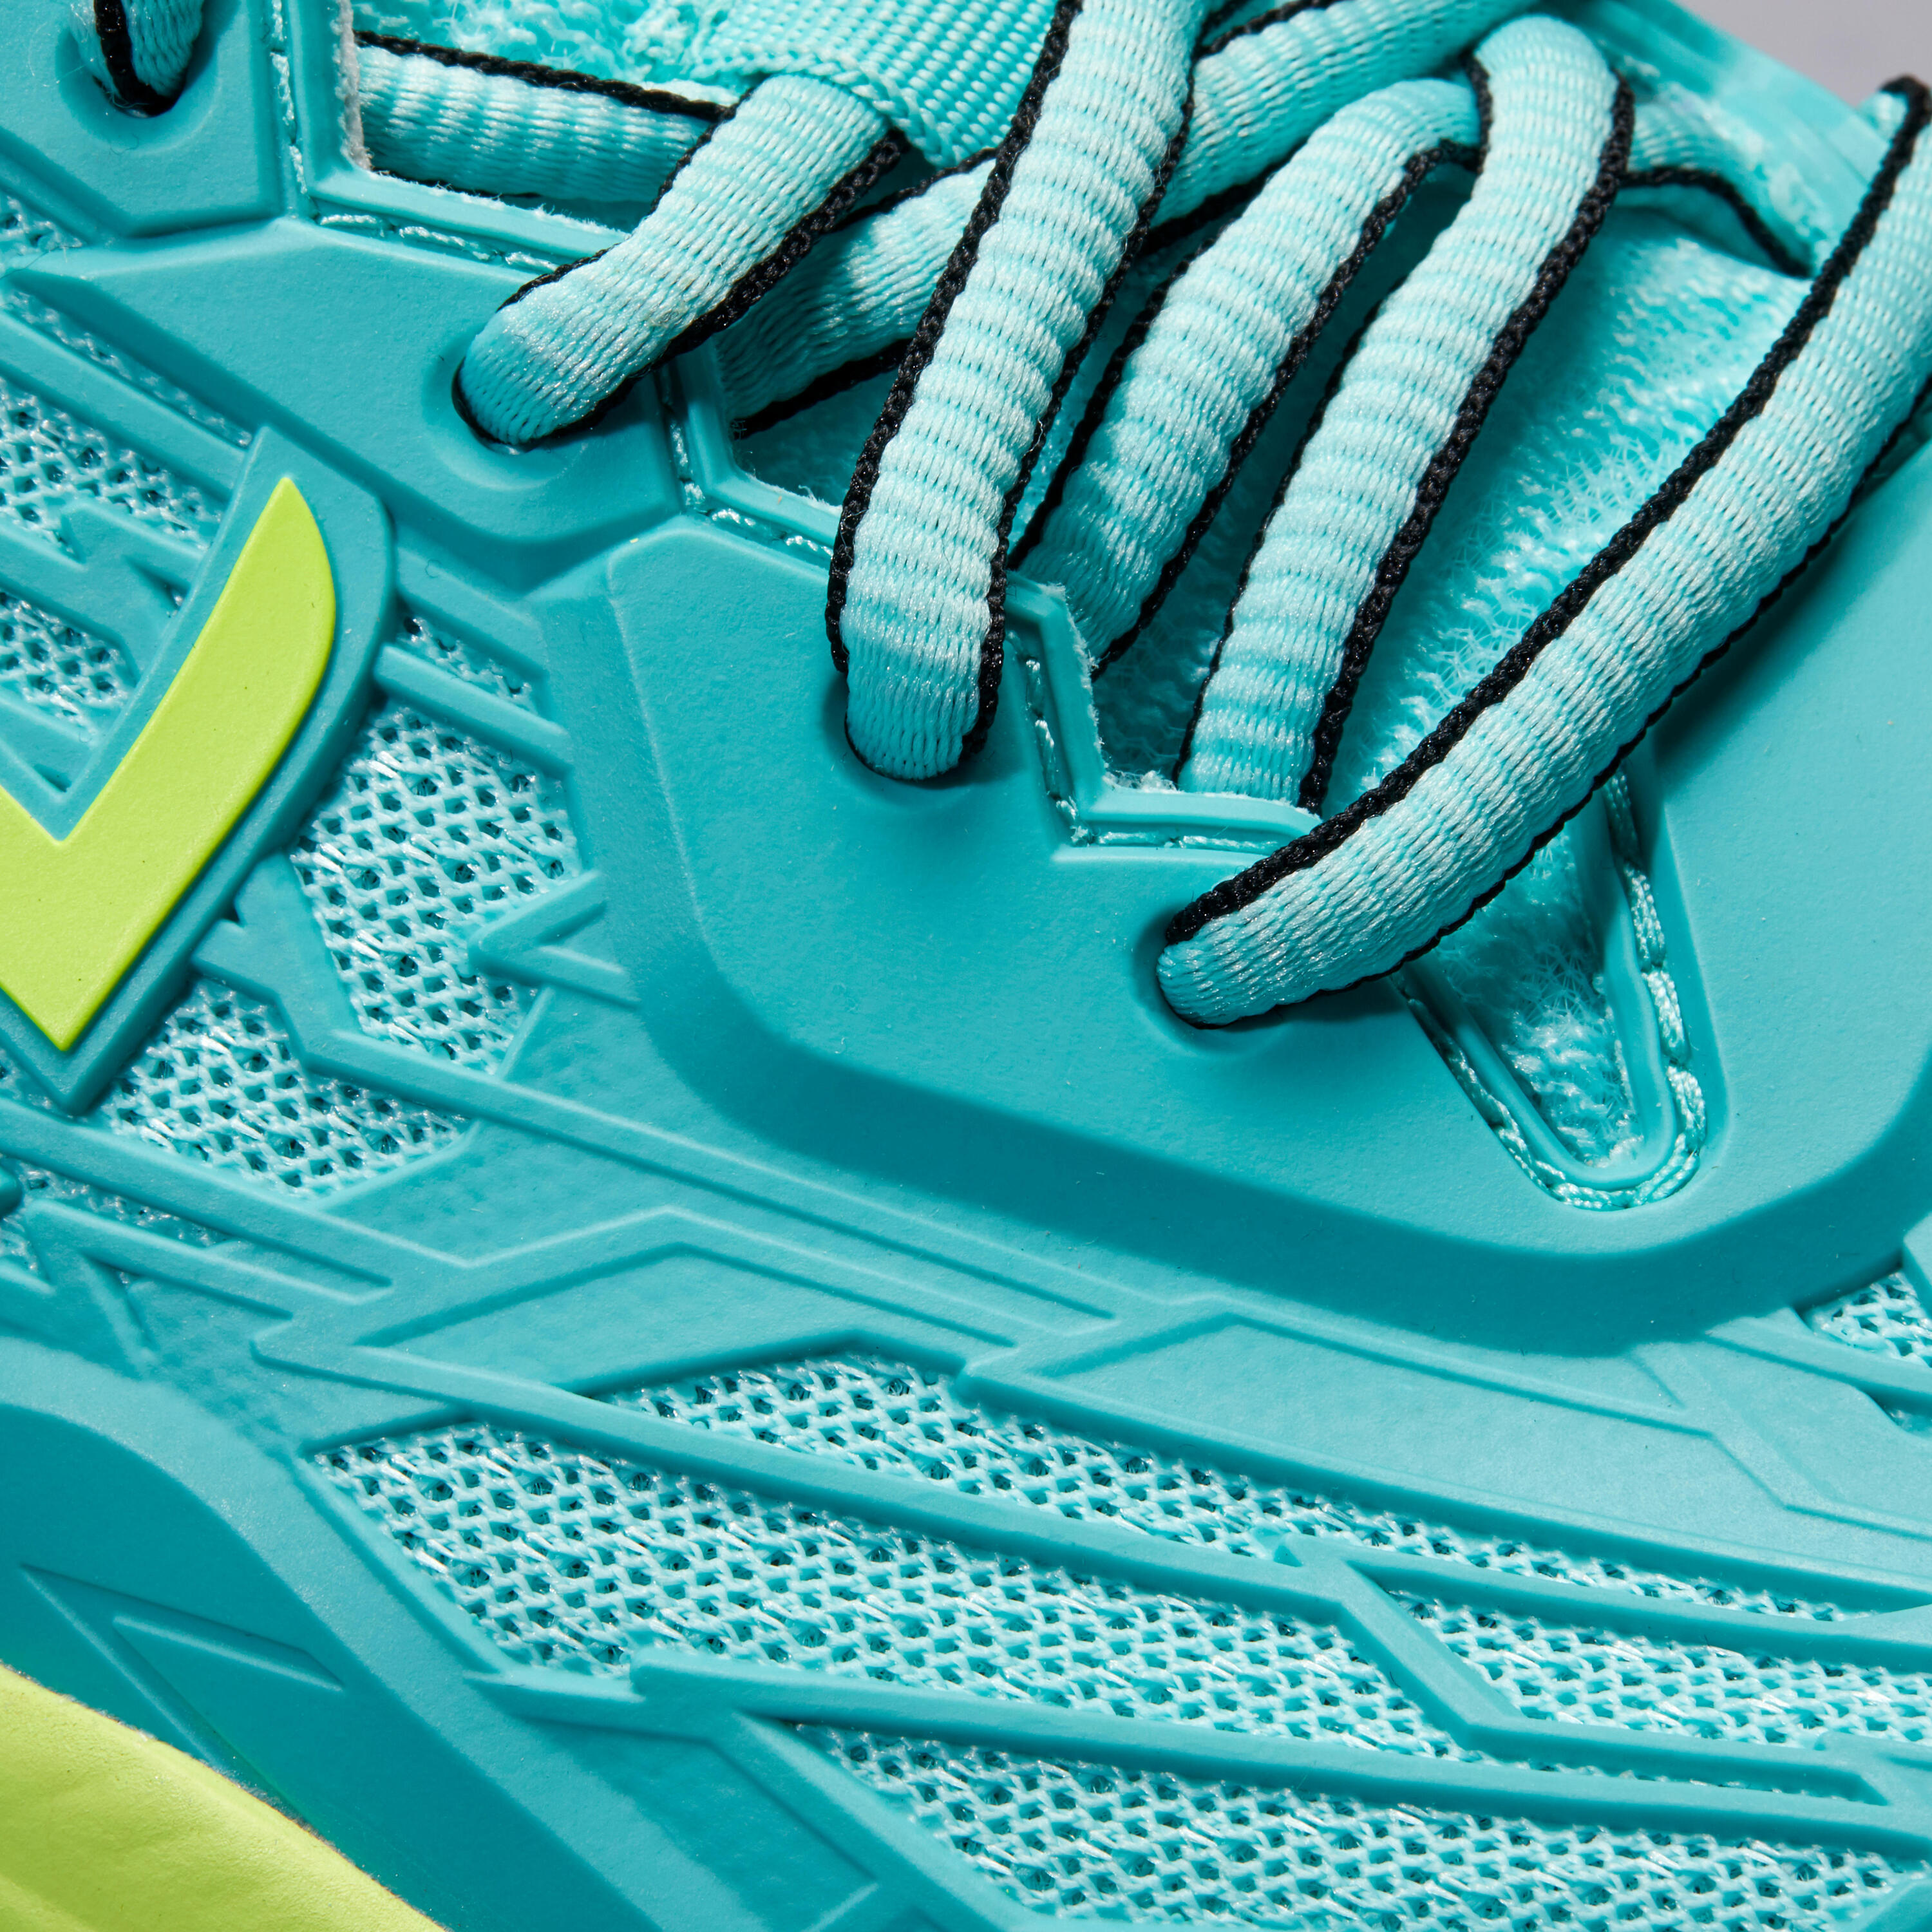 TS990 Women's Tennis Shoes - Turquoise 9/9